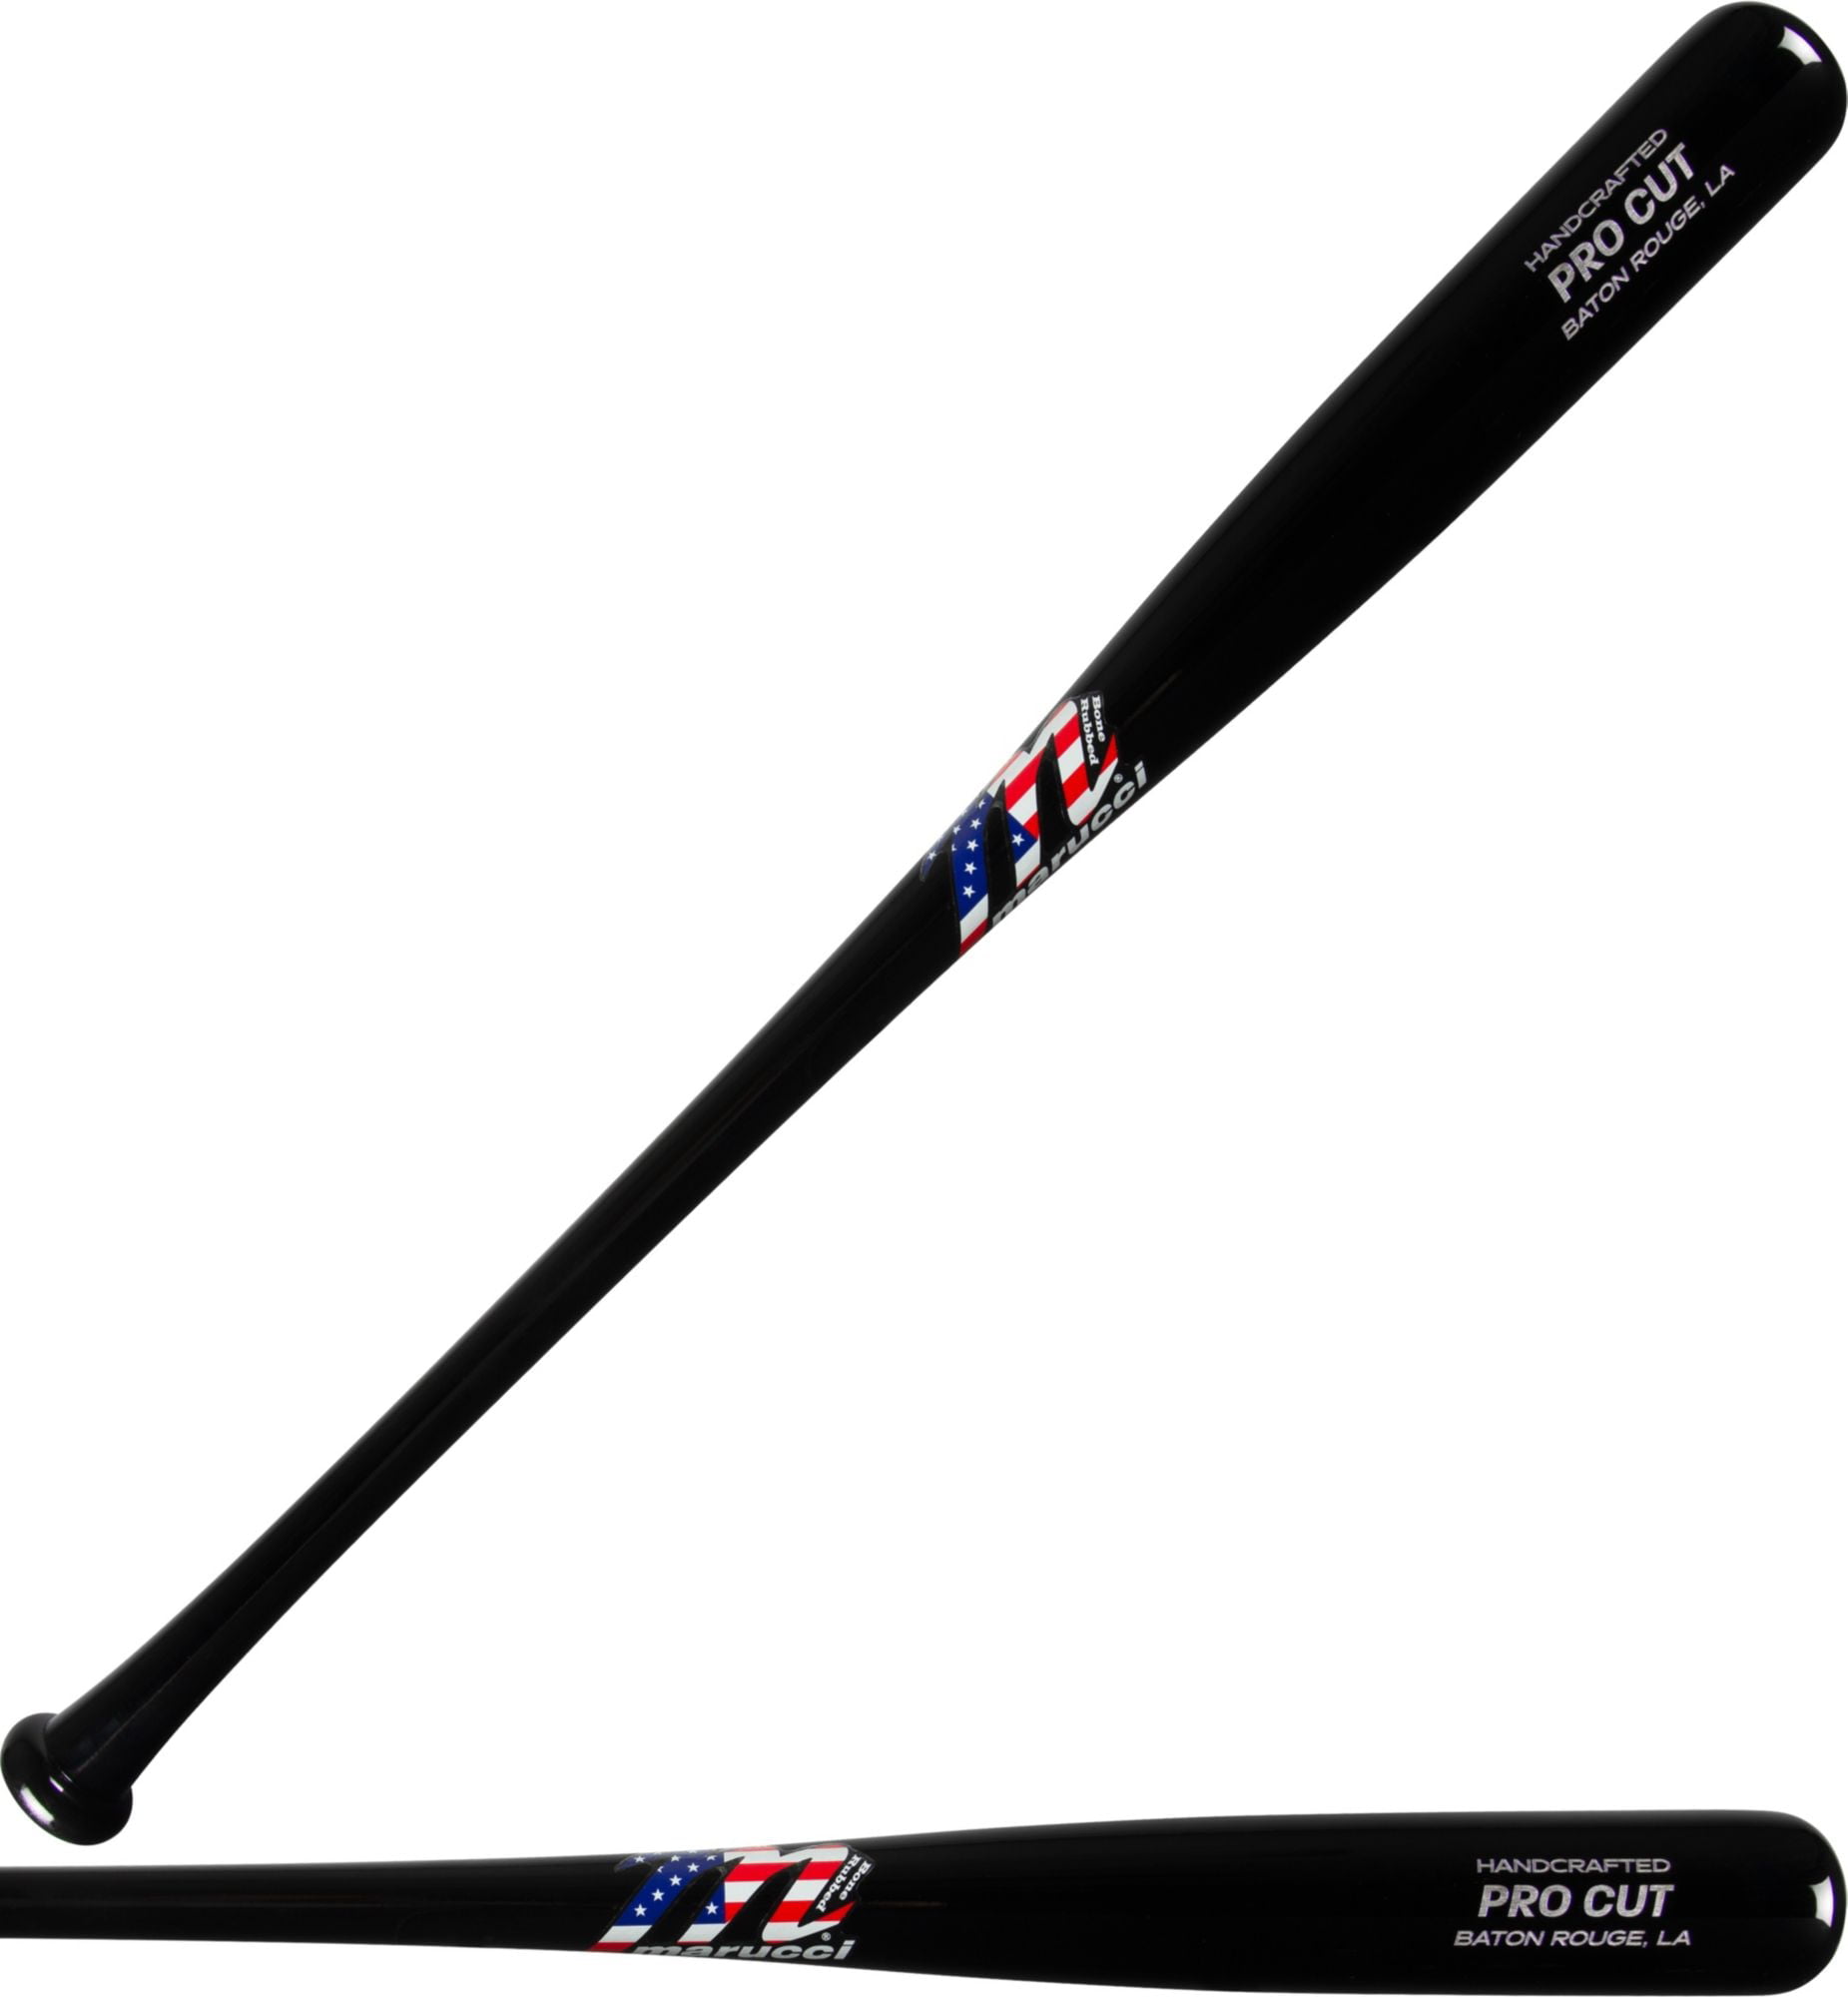 Youth Baseball Bat CBC Sabre 141Y Northern Ash USA Approved 